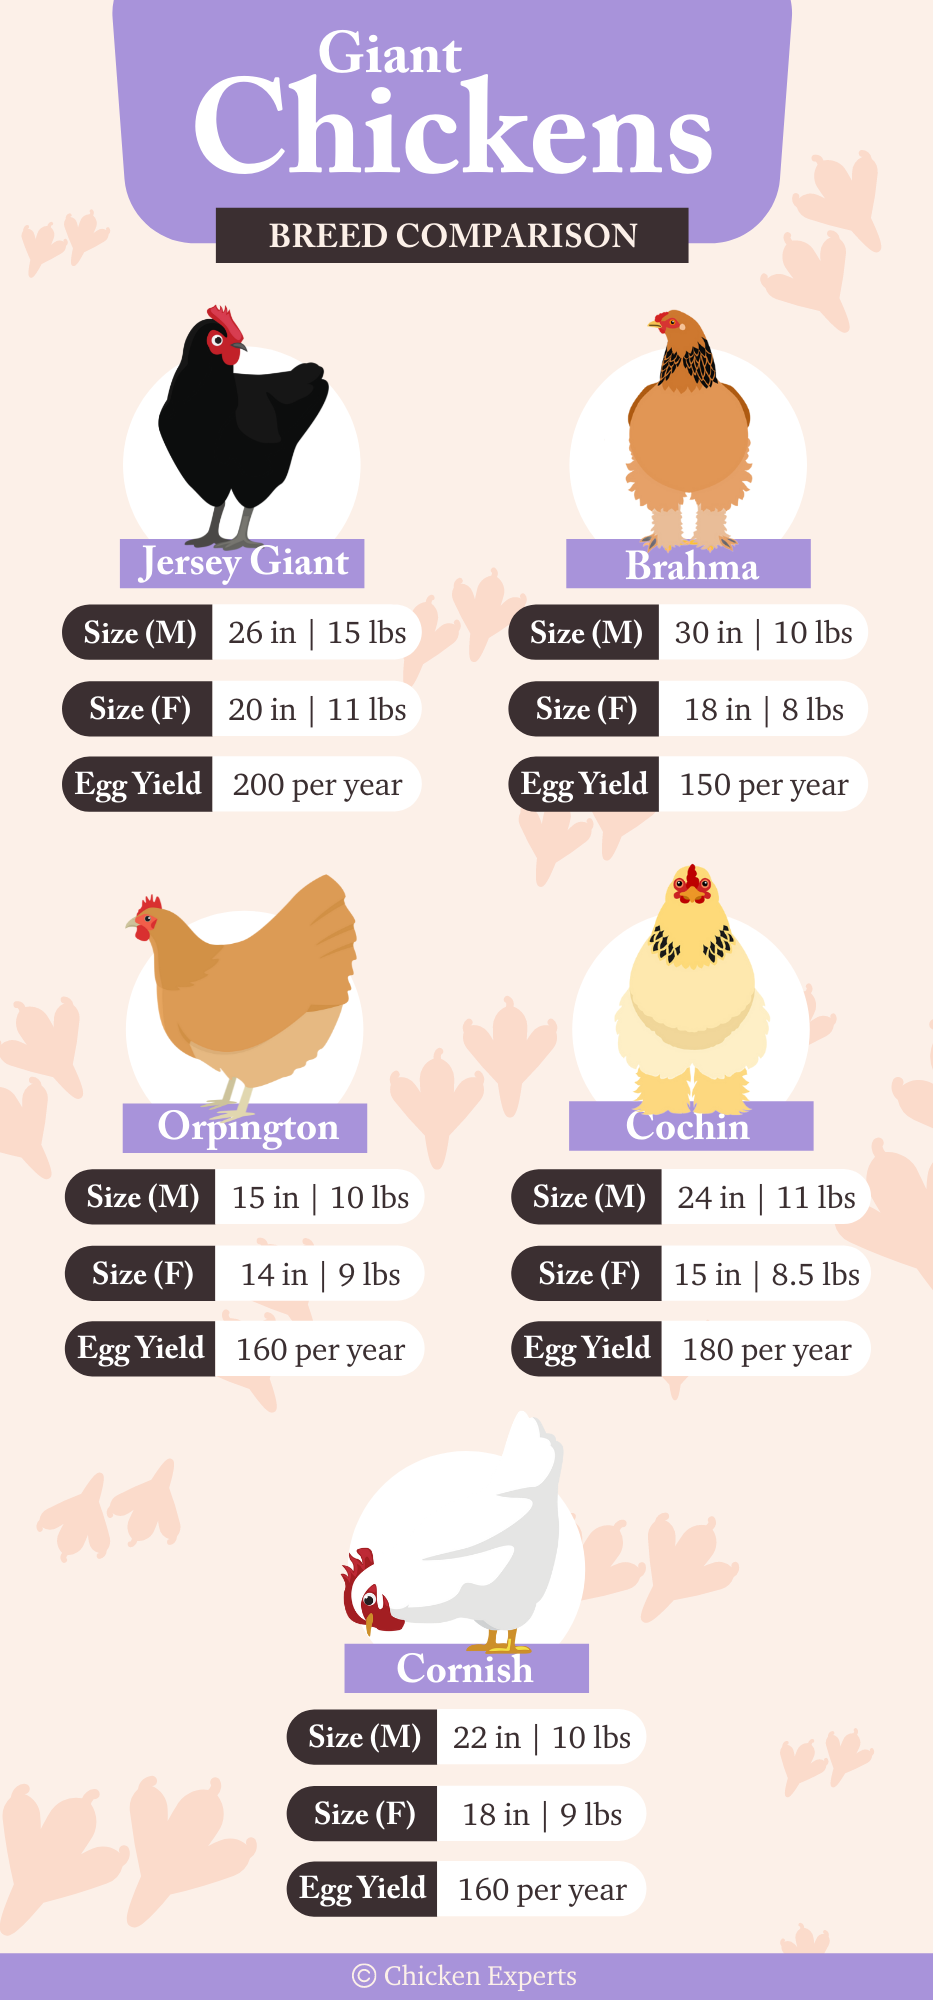 giant chicken breeds comparison chart